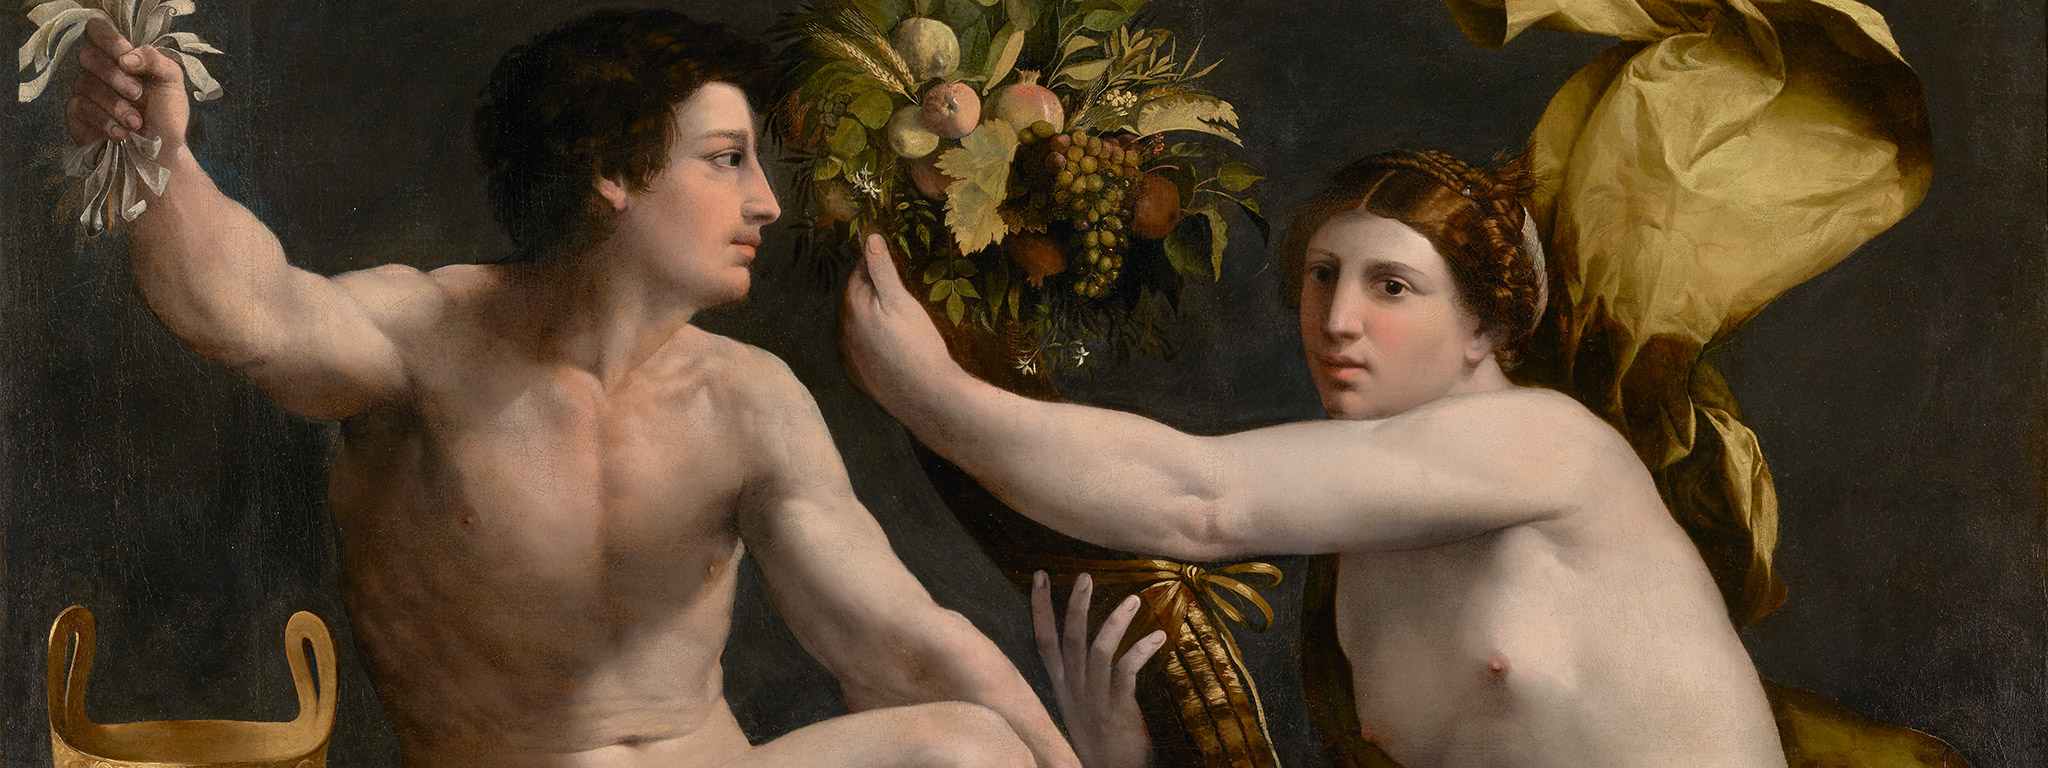 Vintage Nude Artwork - The Renaissance Nude